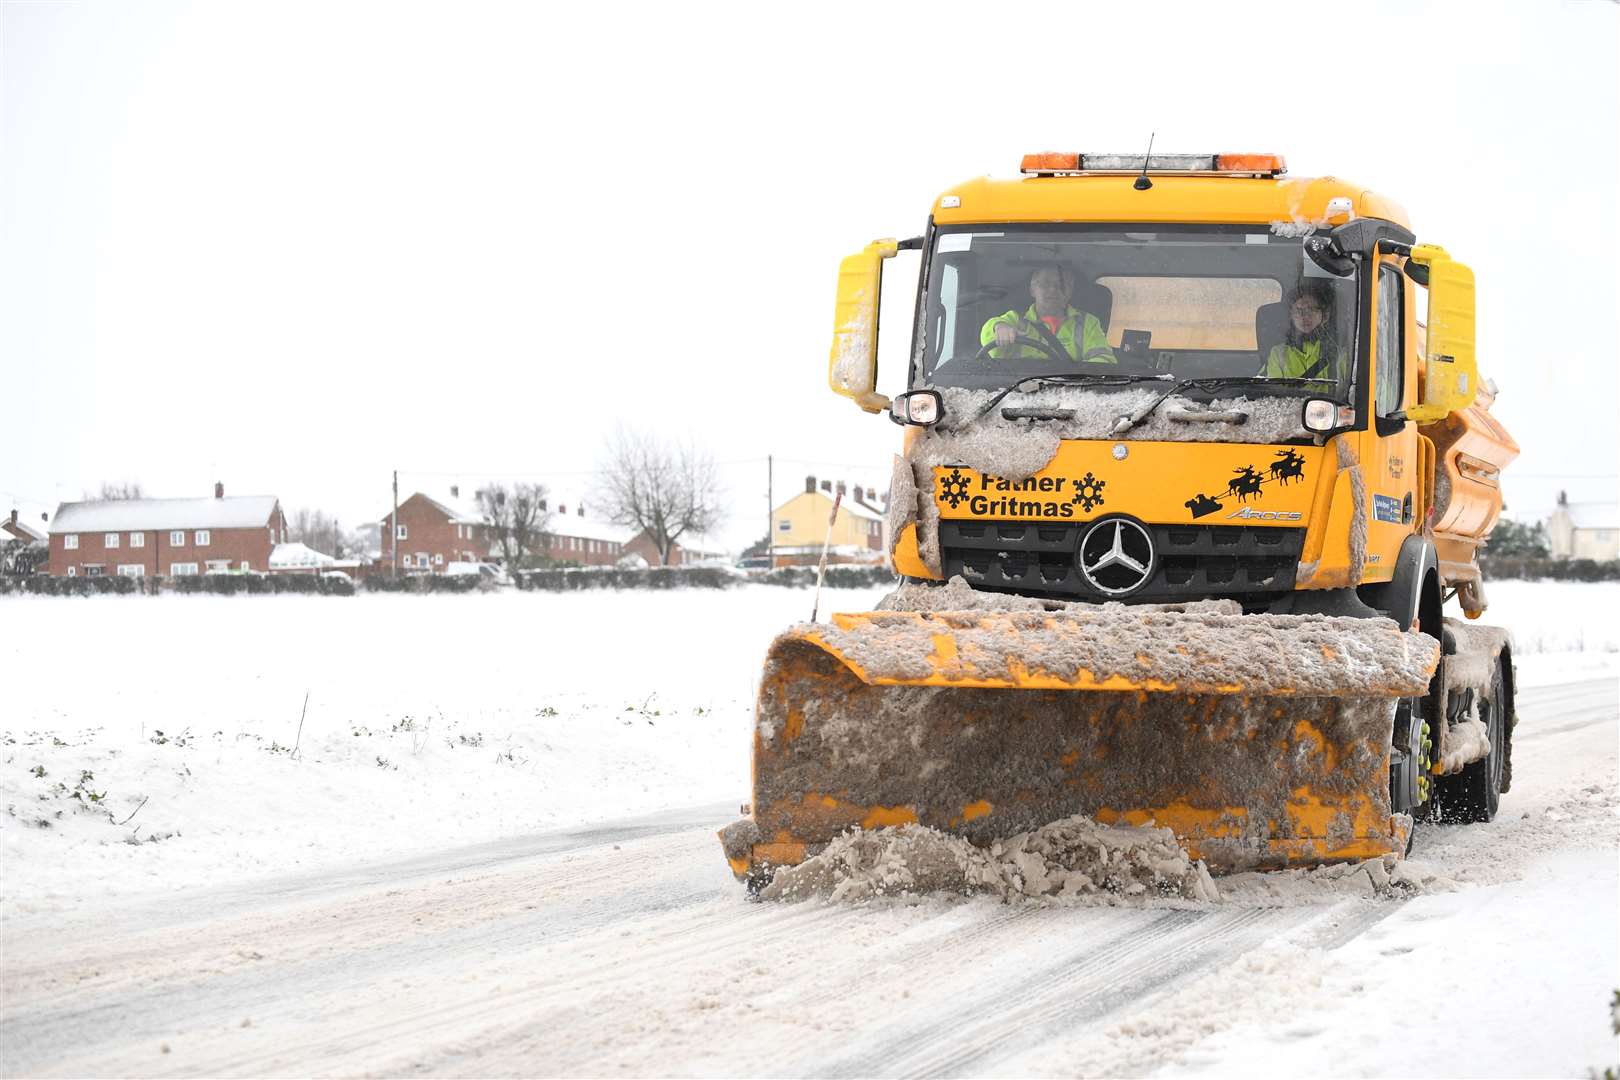 A ‘Father Gritmas’ snowplough clears the road through Barham, Suffolk (Joe Giddens/PA)